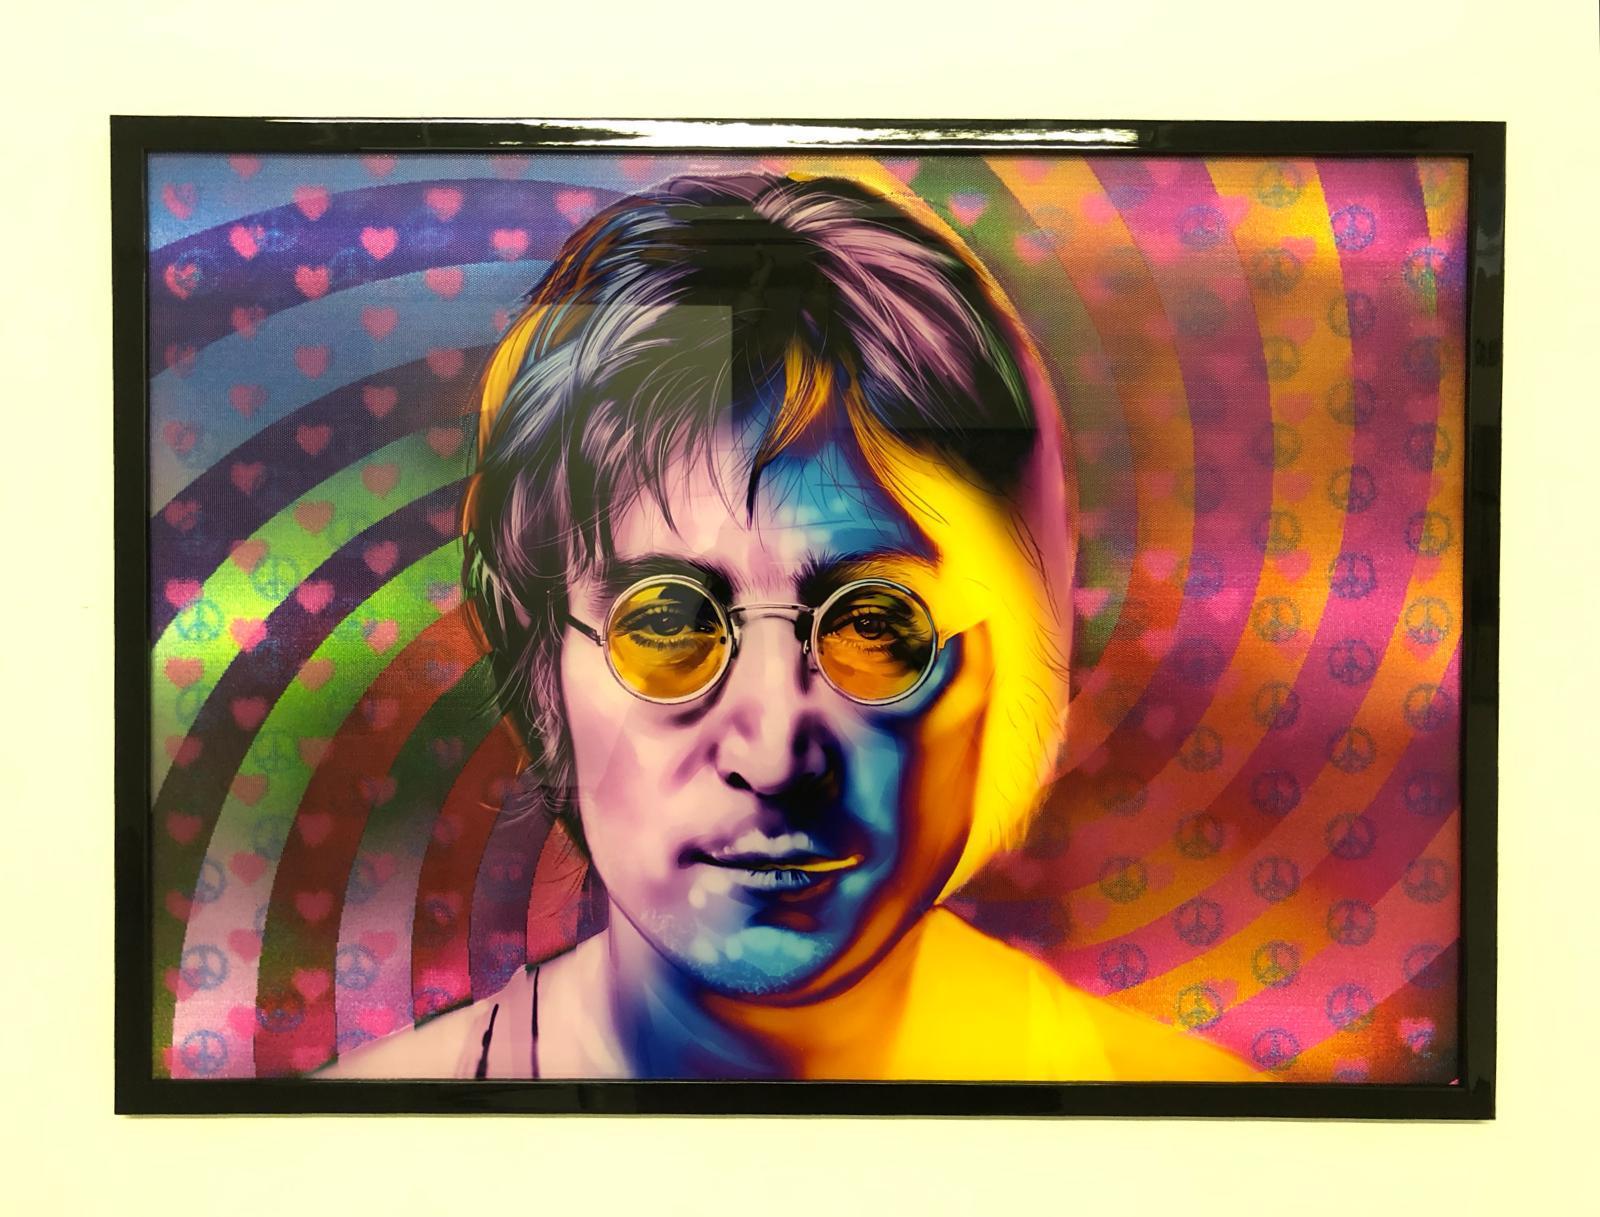 John Lennon 3d moving image art work pexi glass art unique signed stormzy - Mixed Media Art by Metin Salih